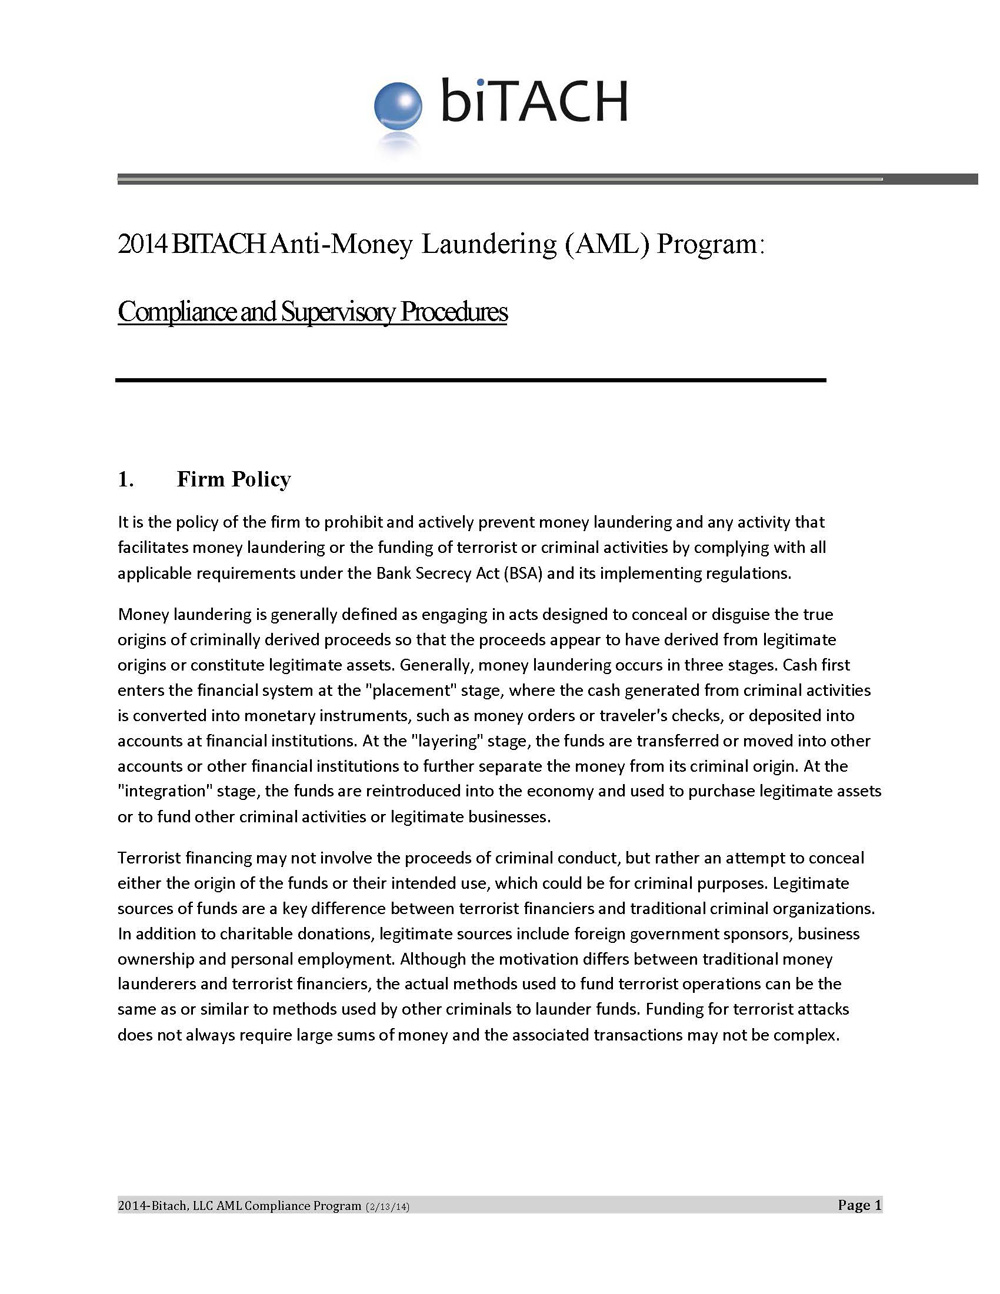 Bitach Exchange 2014 AML Program Final-USA_Page_01